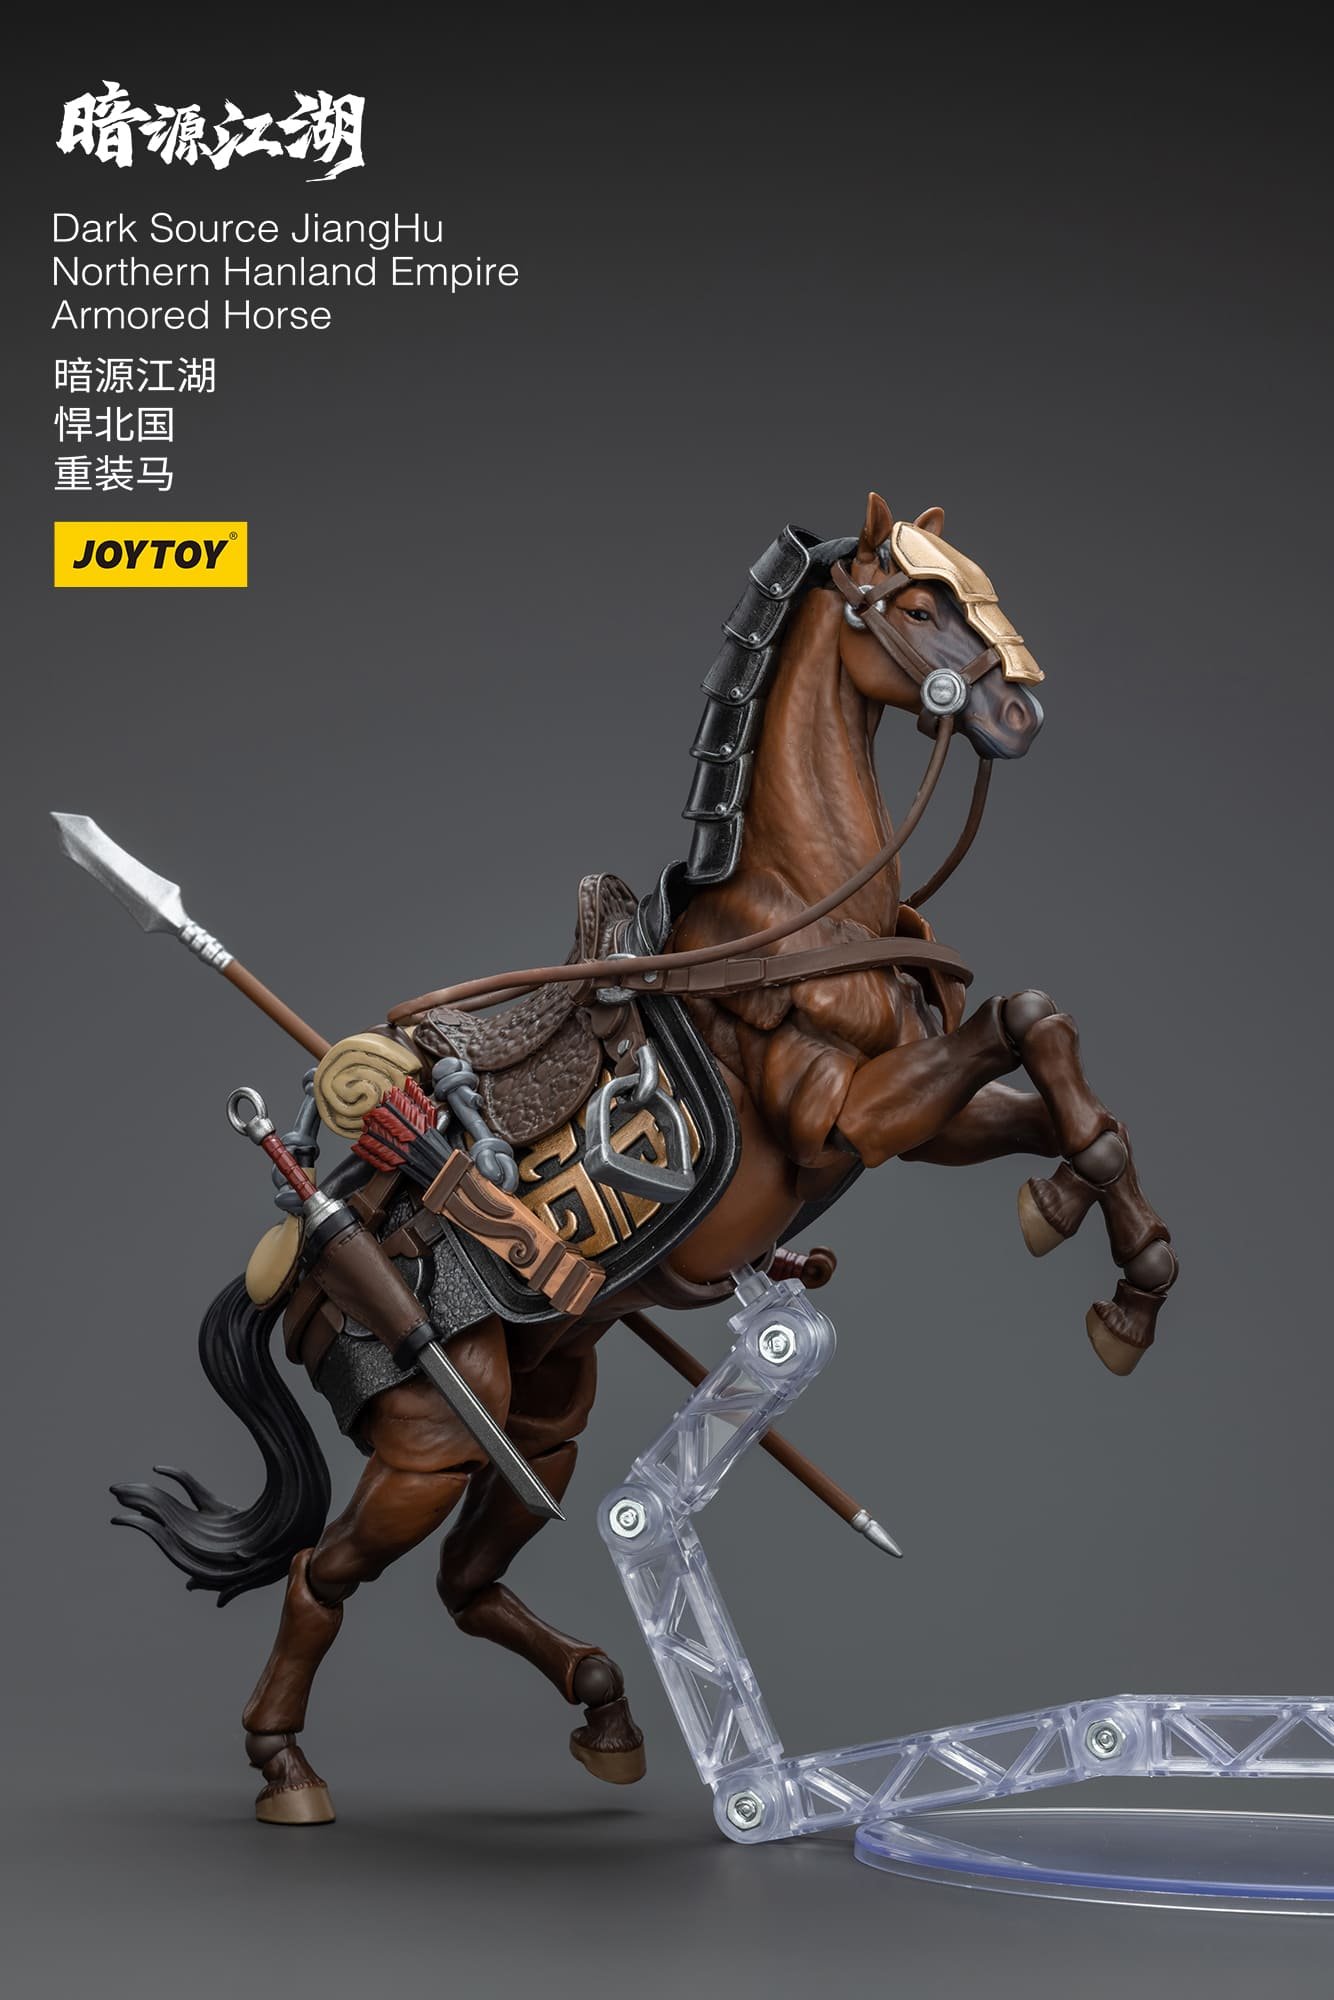 JOYTOY Dark Source JiangHu Northern Hanland Empire Armored Horse 2 - Joytoy Figure